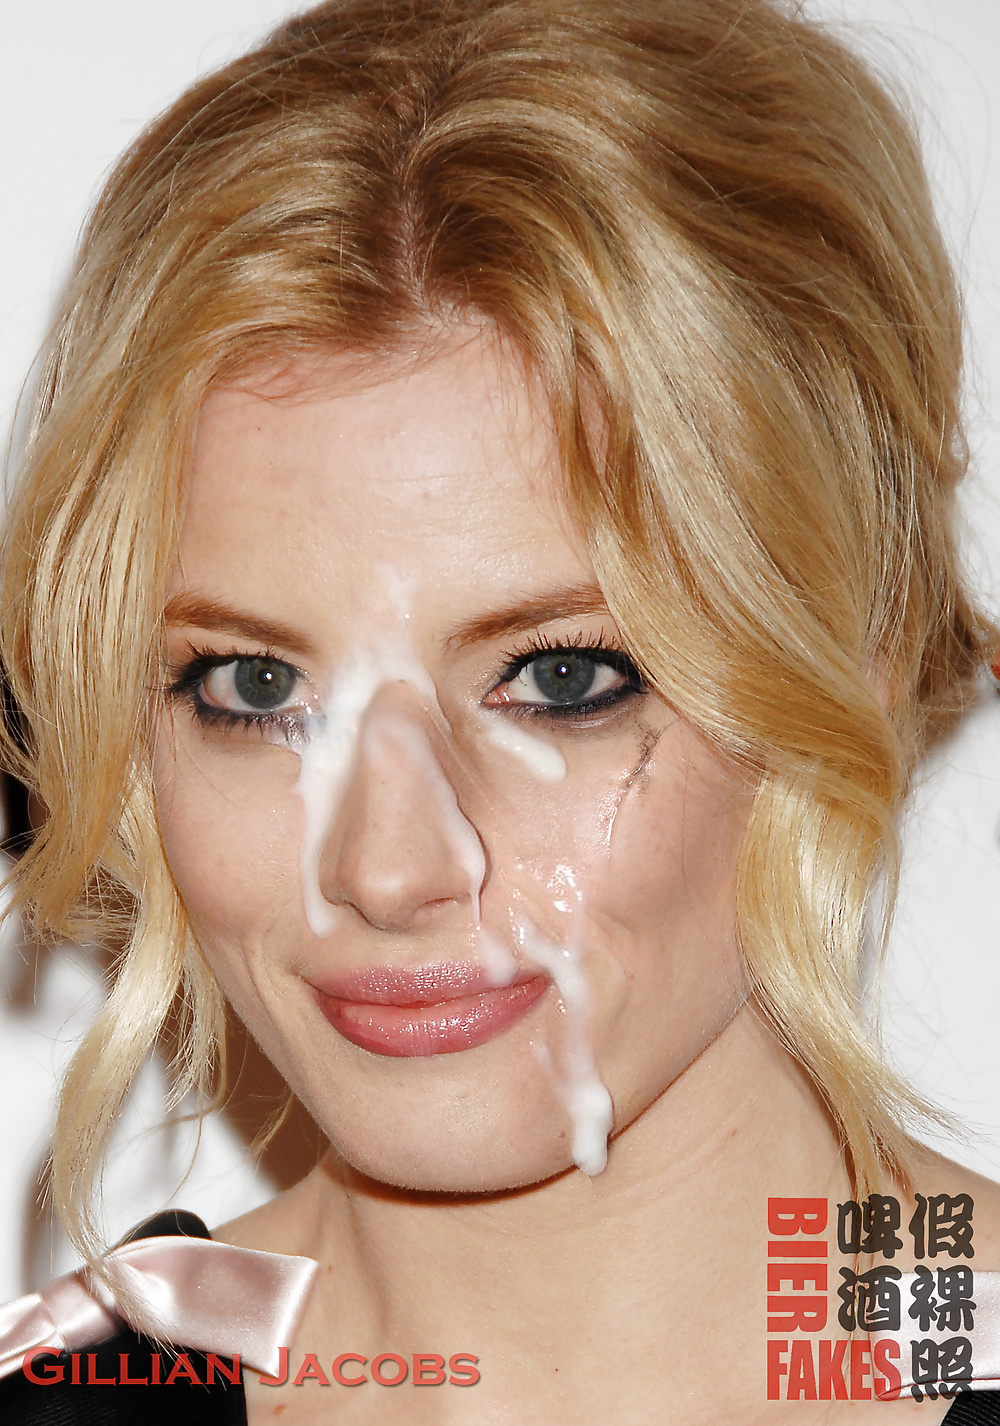 BierFakes Celebrity Fakes cumfakes facial cumshot - Photo #2